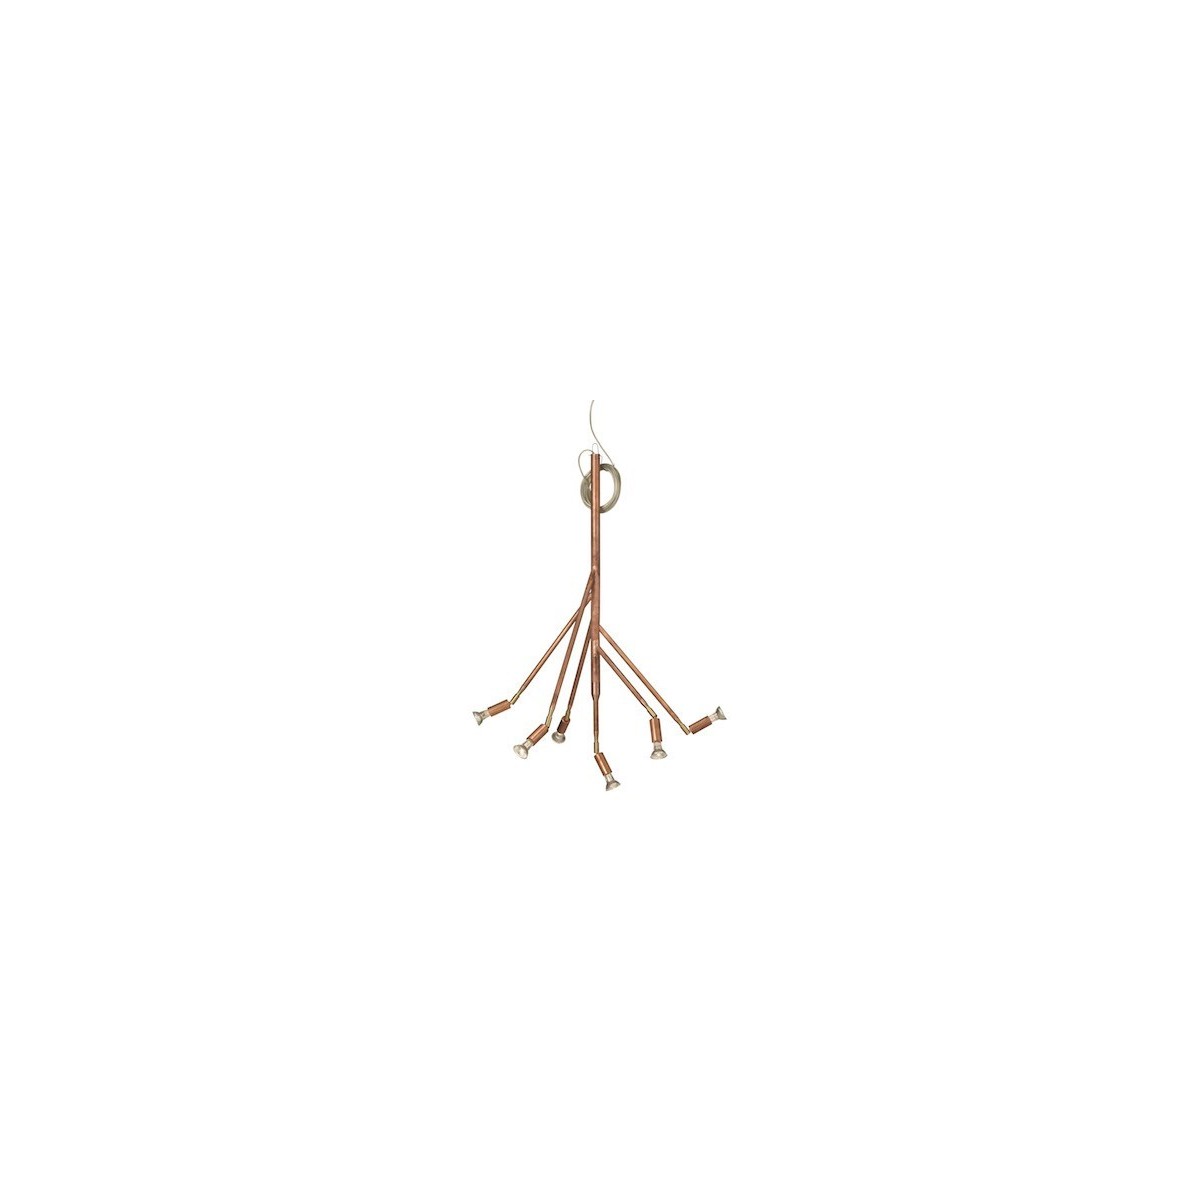 cuivre brut - 6 branches - Kvist